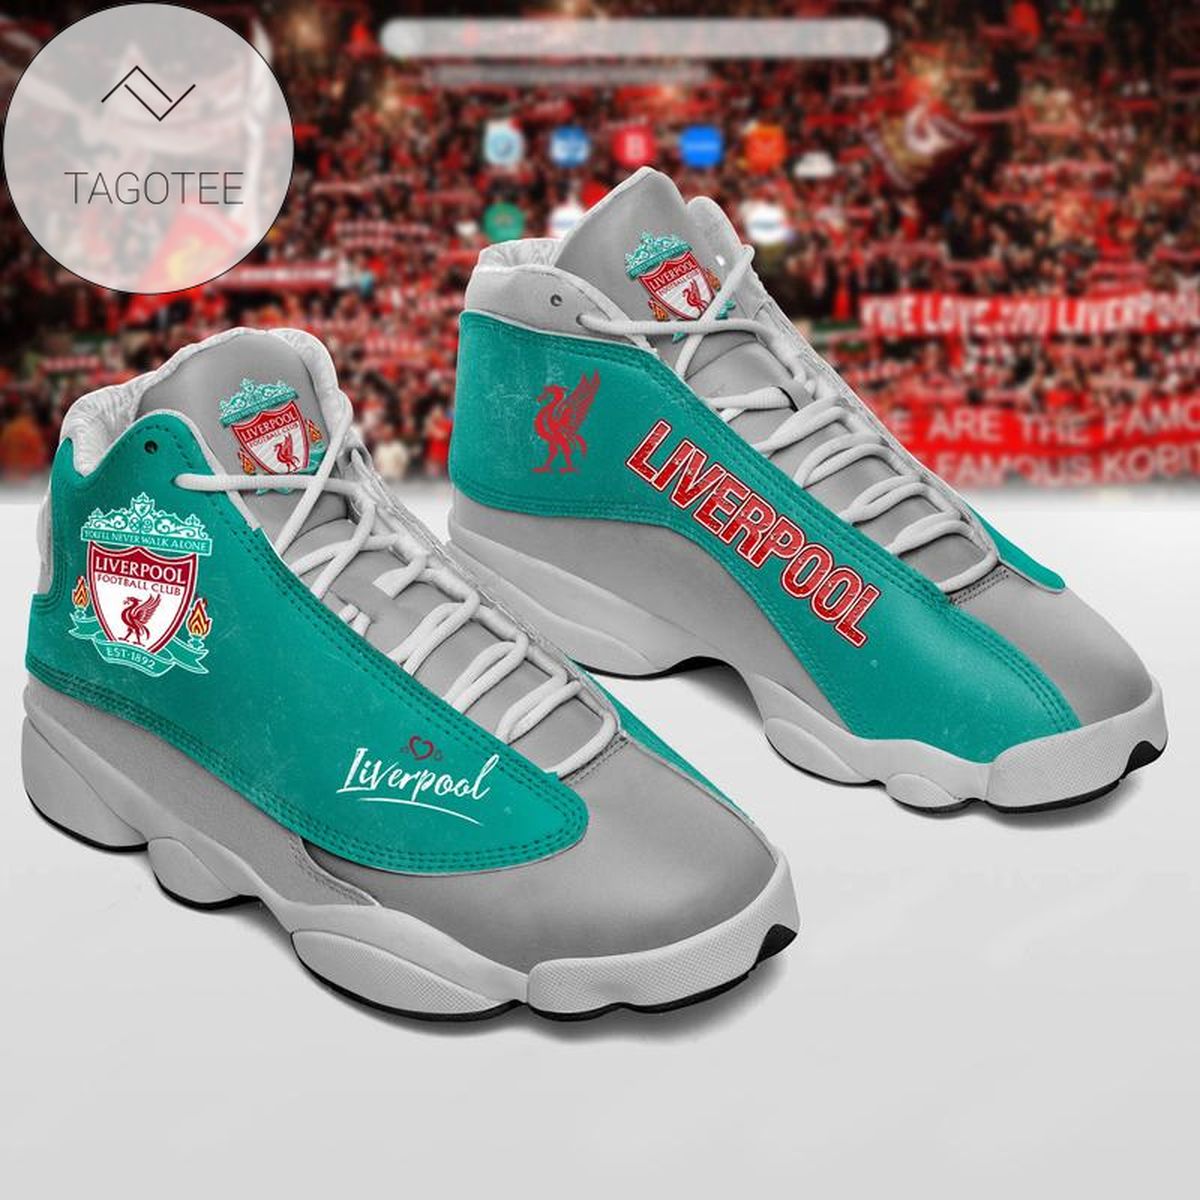 Liverpool Air Jordan 13 Shoes For Fan Sneakers T390